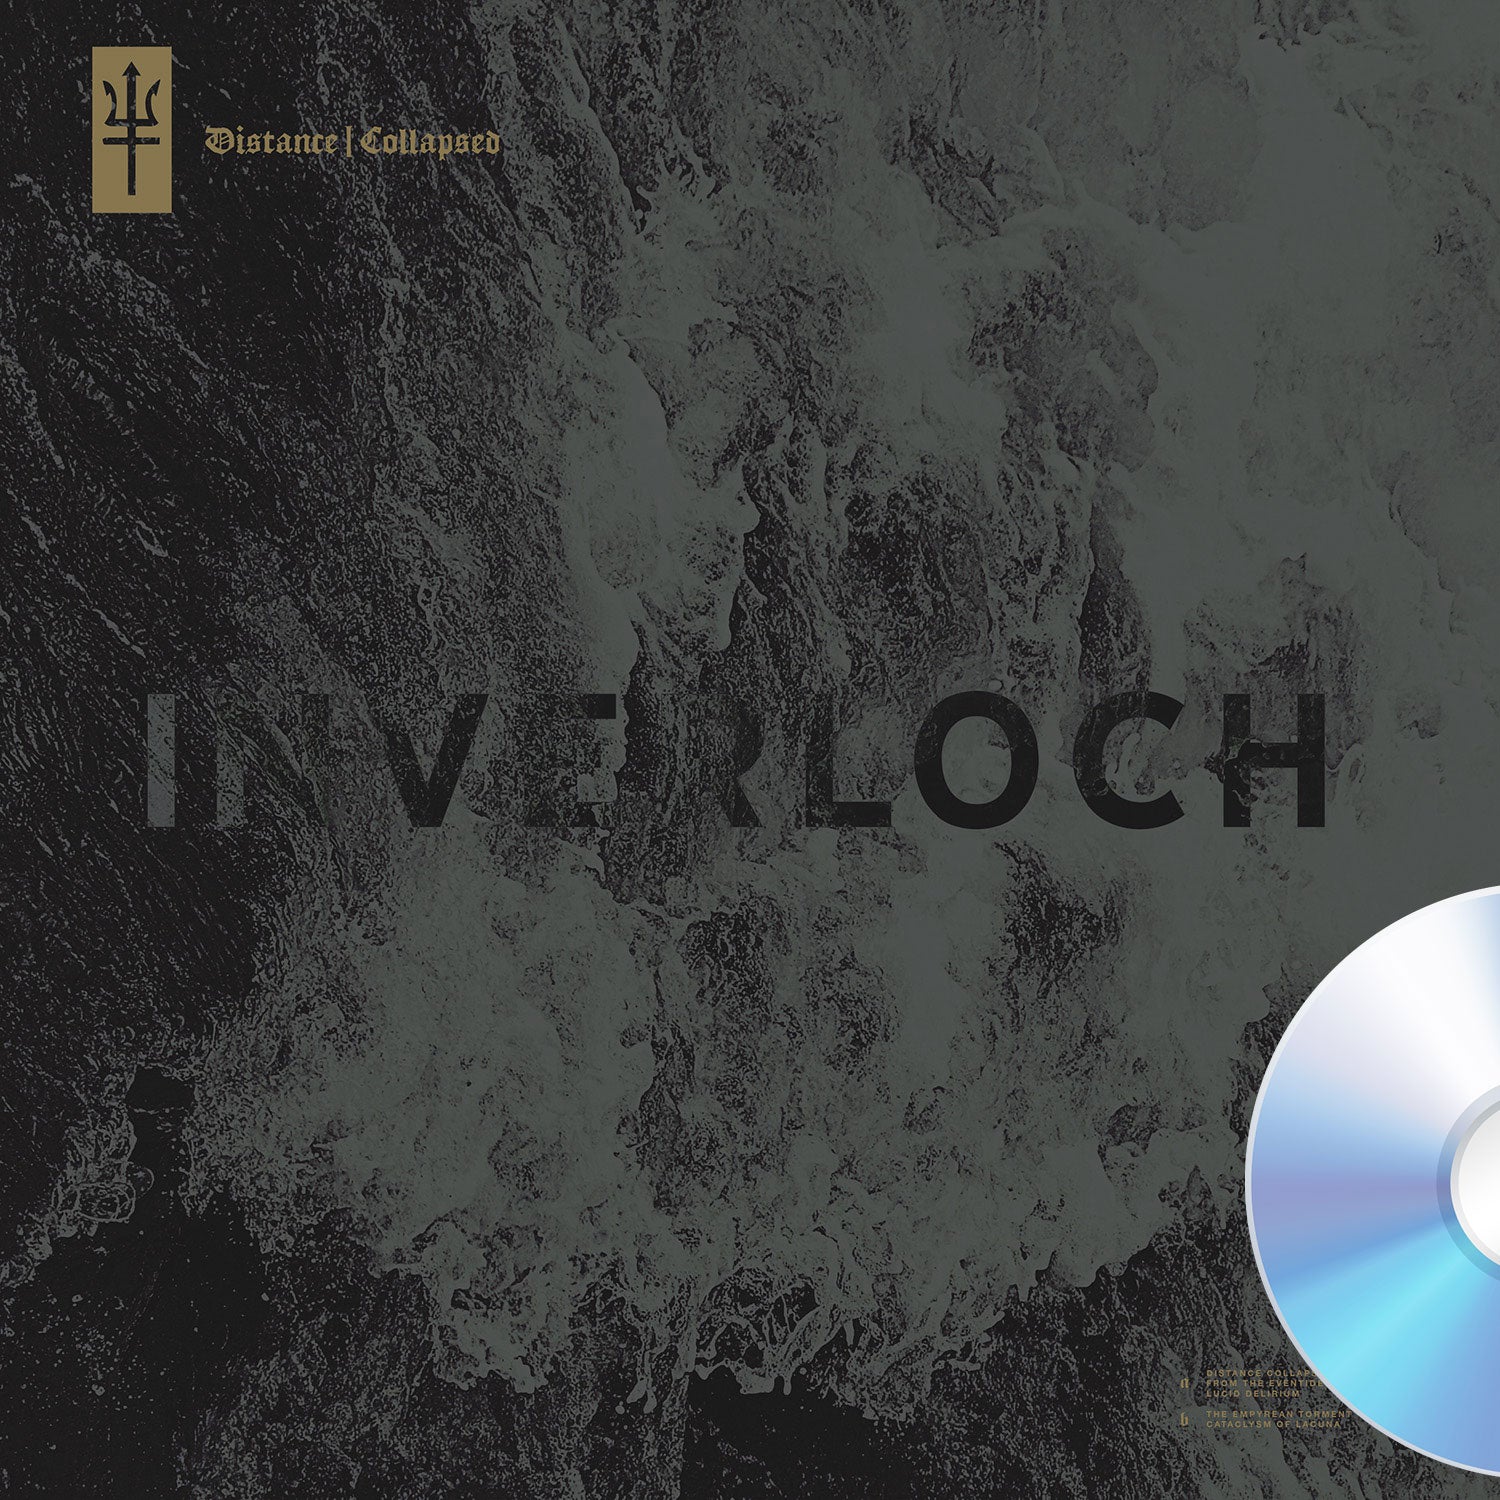 Inverloch "Distance | Collapsed" CD